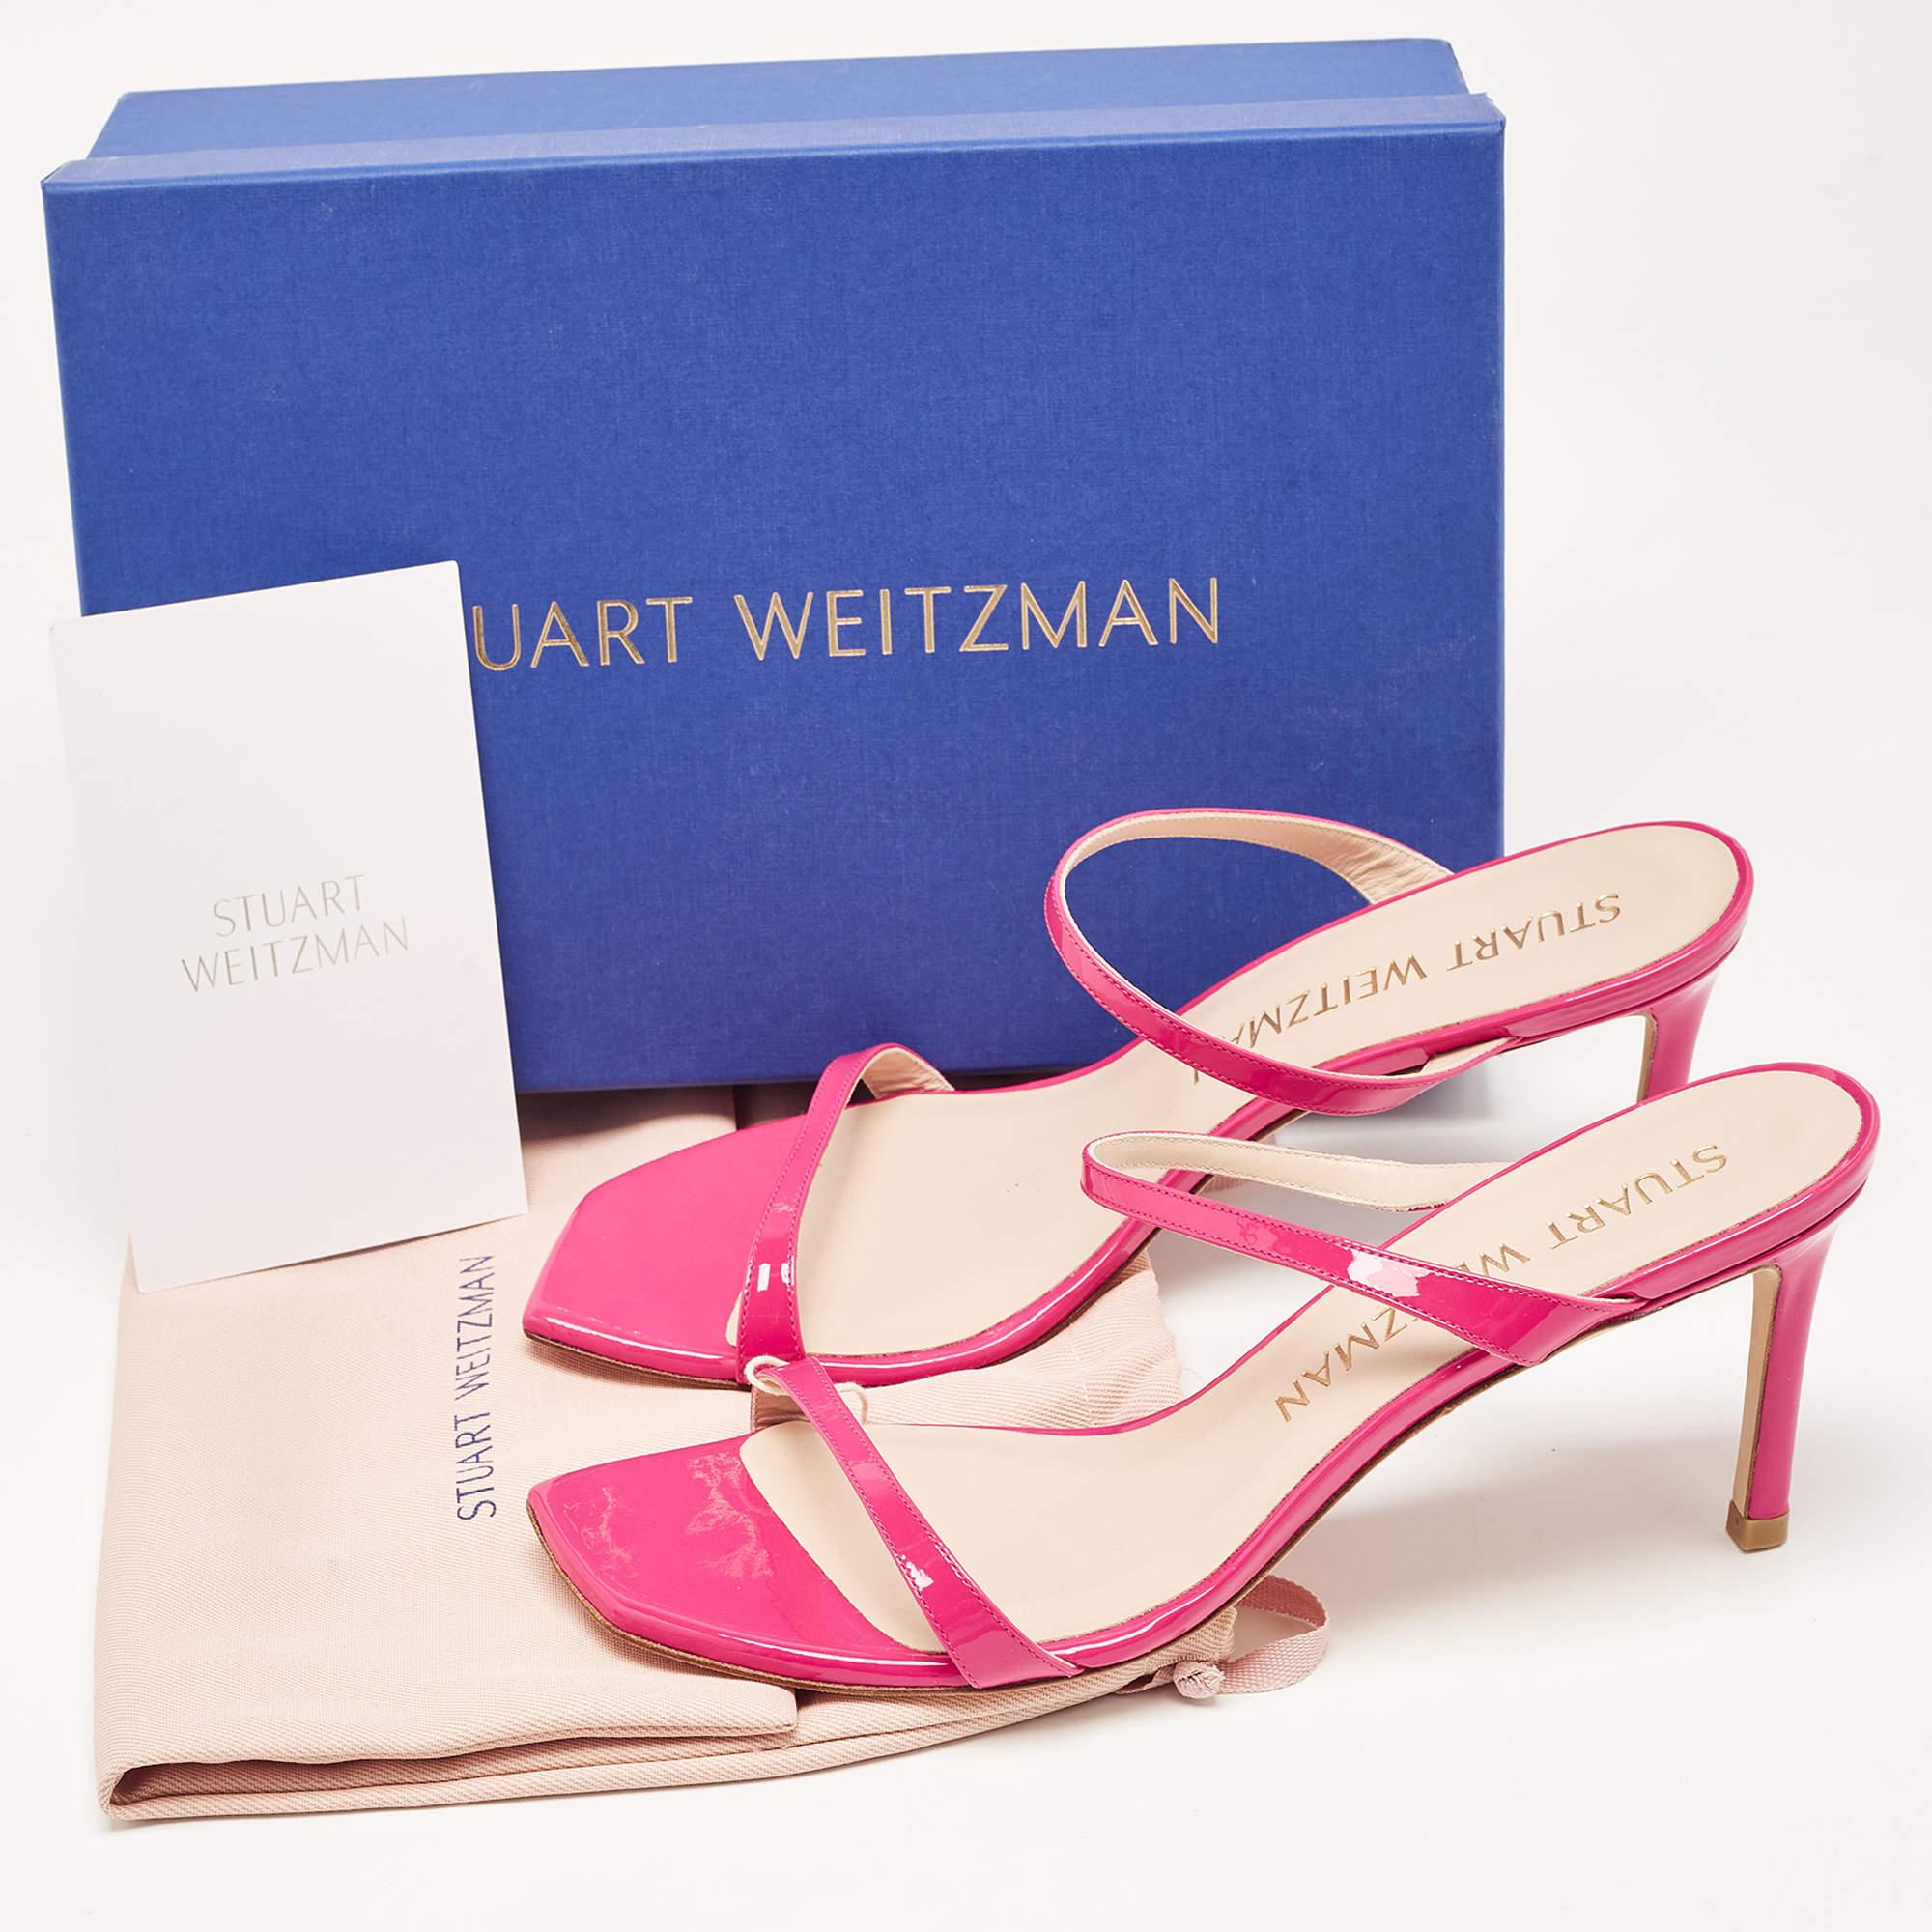 Stuart Weitzman Pink Patent Leather Slide Sandals Size 41 5